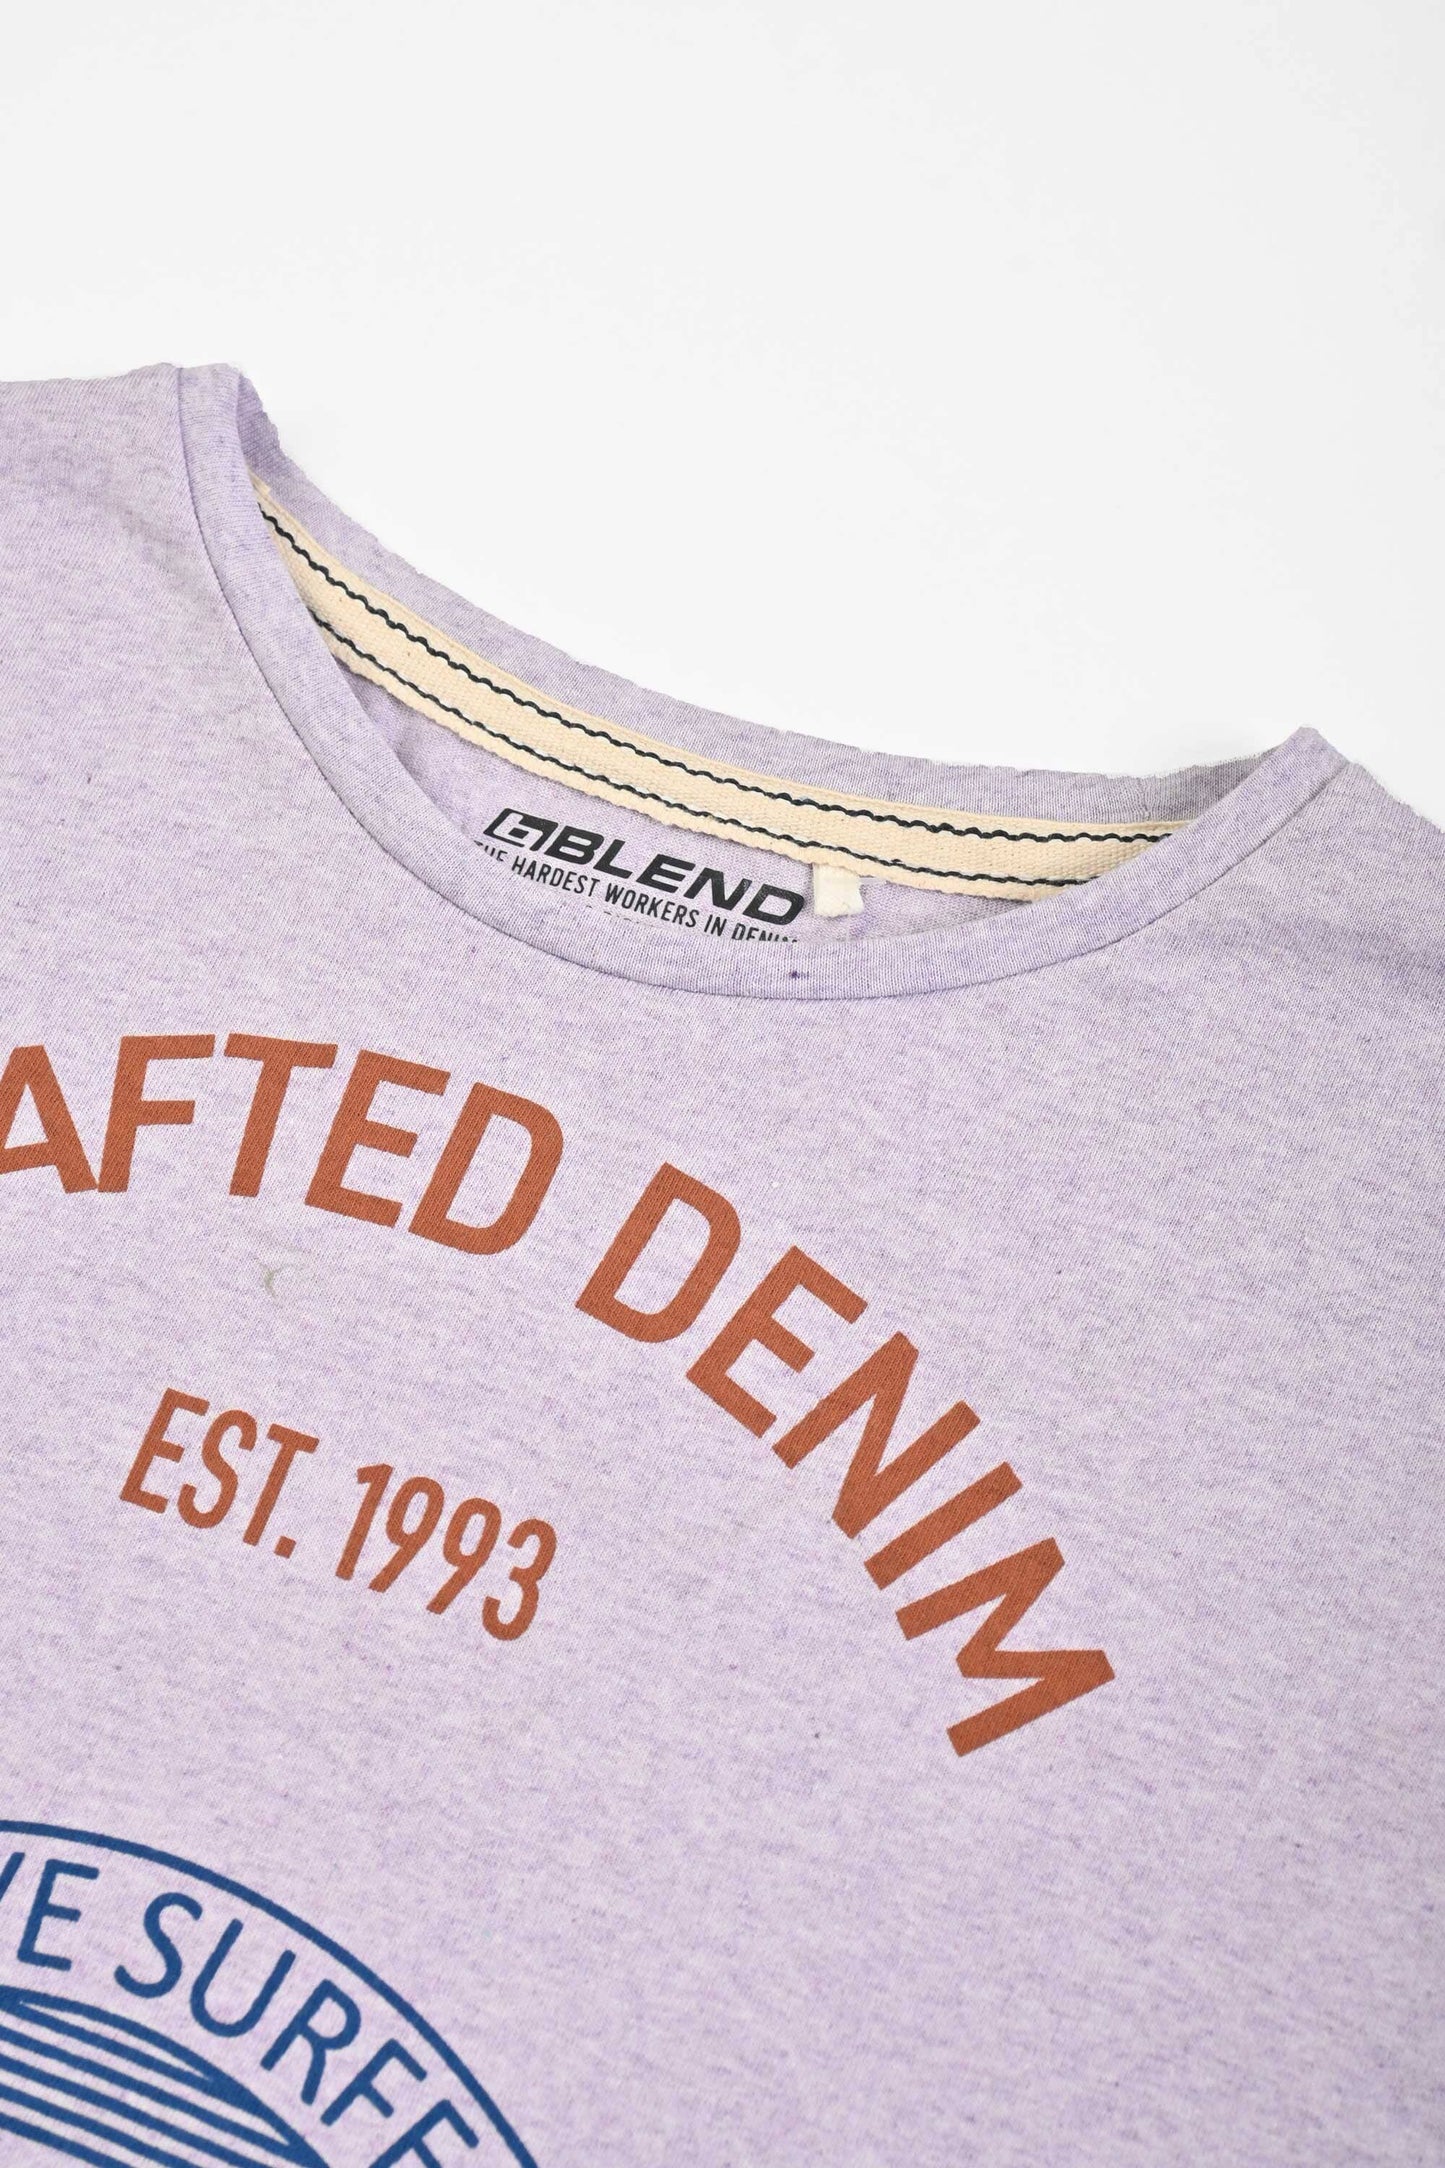 Blend Men's Wave Surfer Printed Minor Fault Tee Shirt Men's Tee Shirt IST 